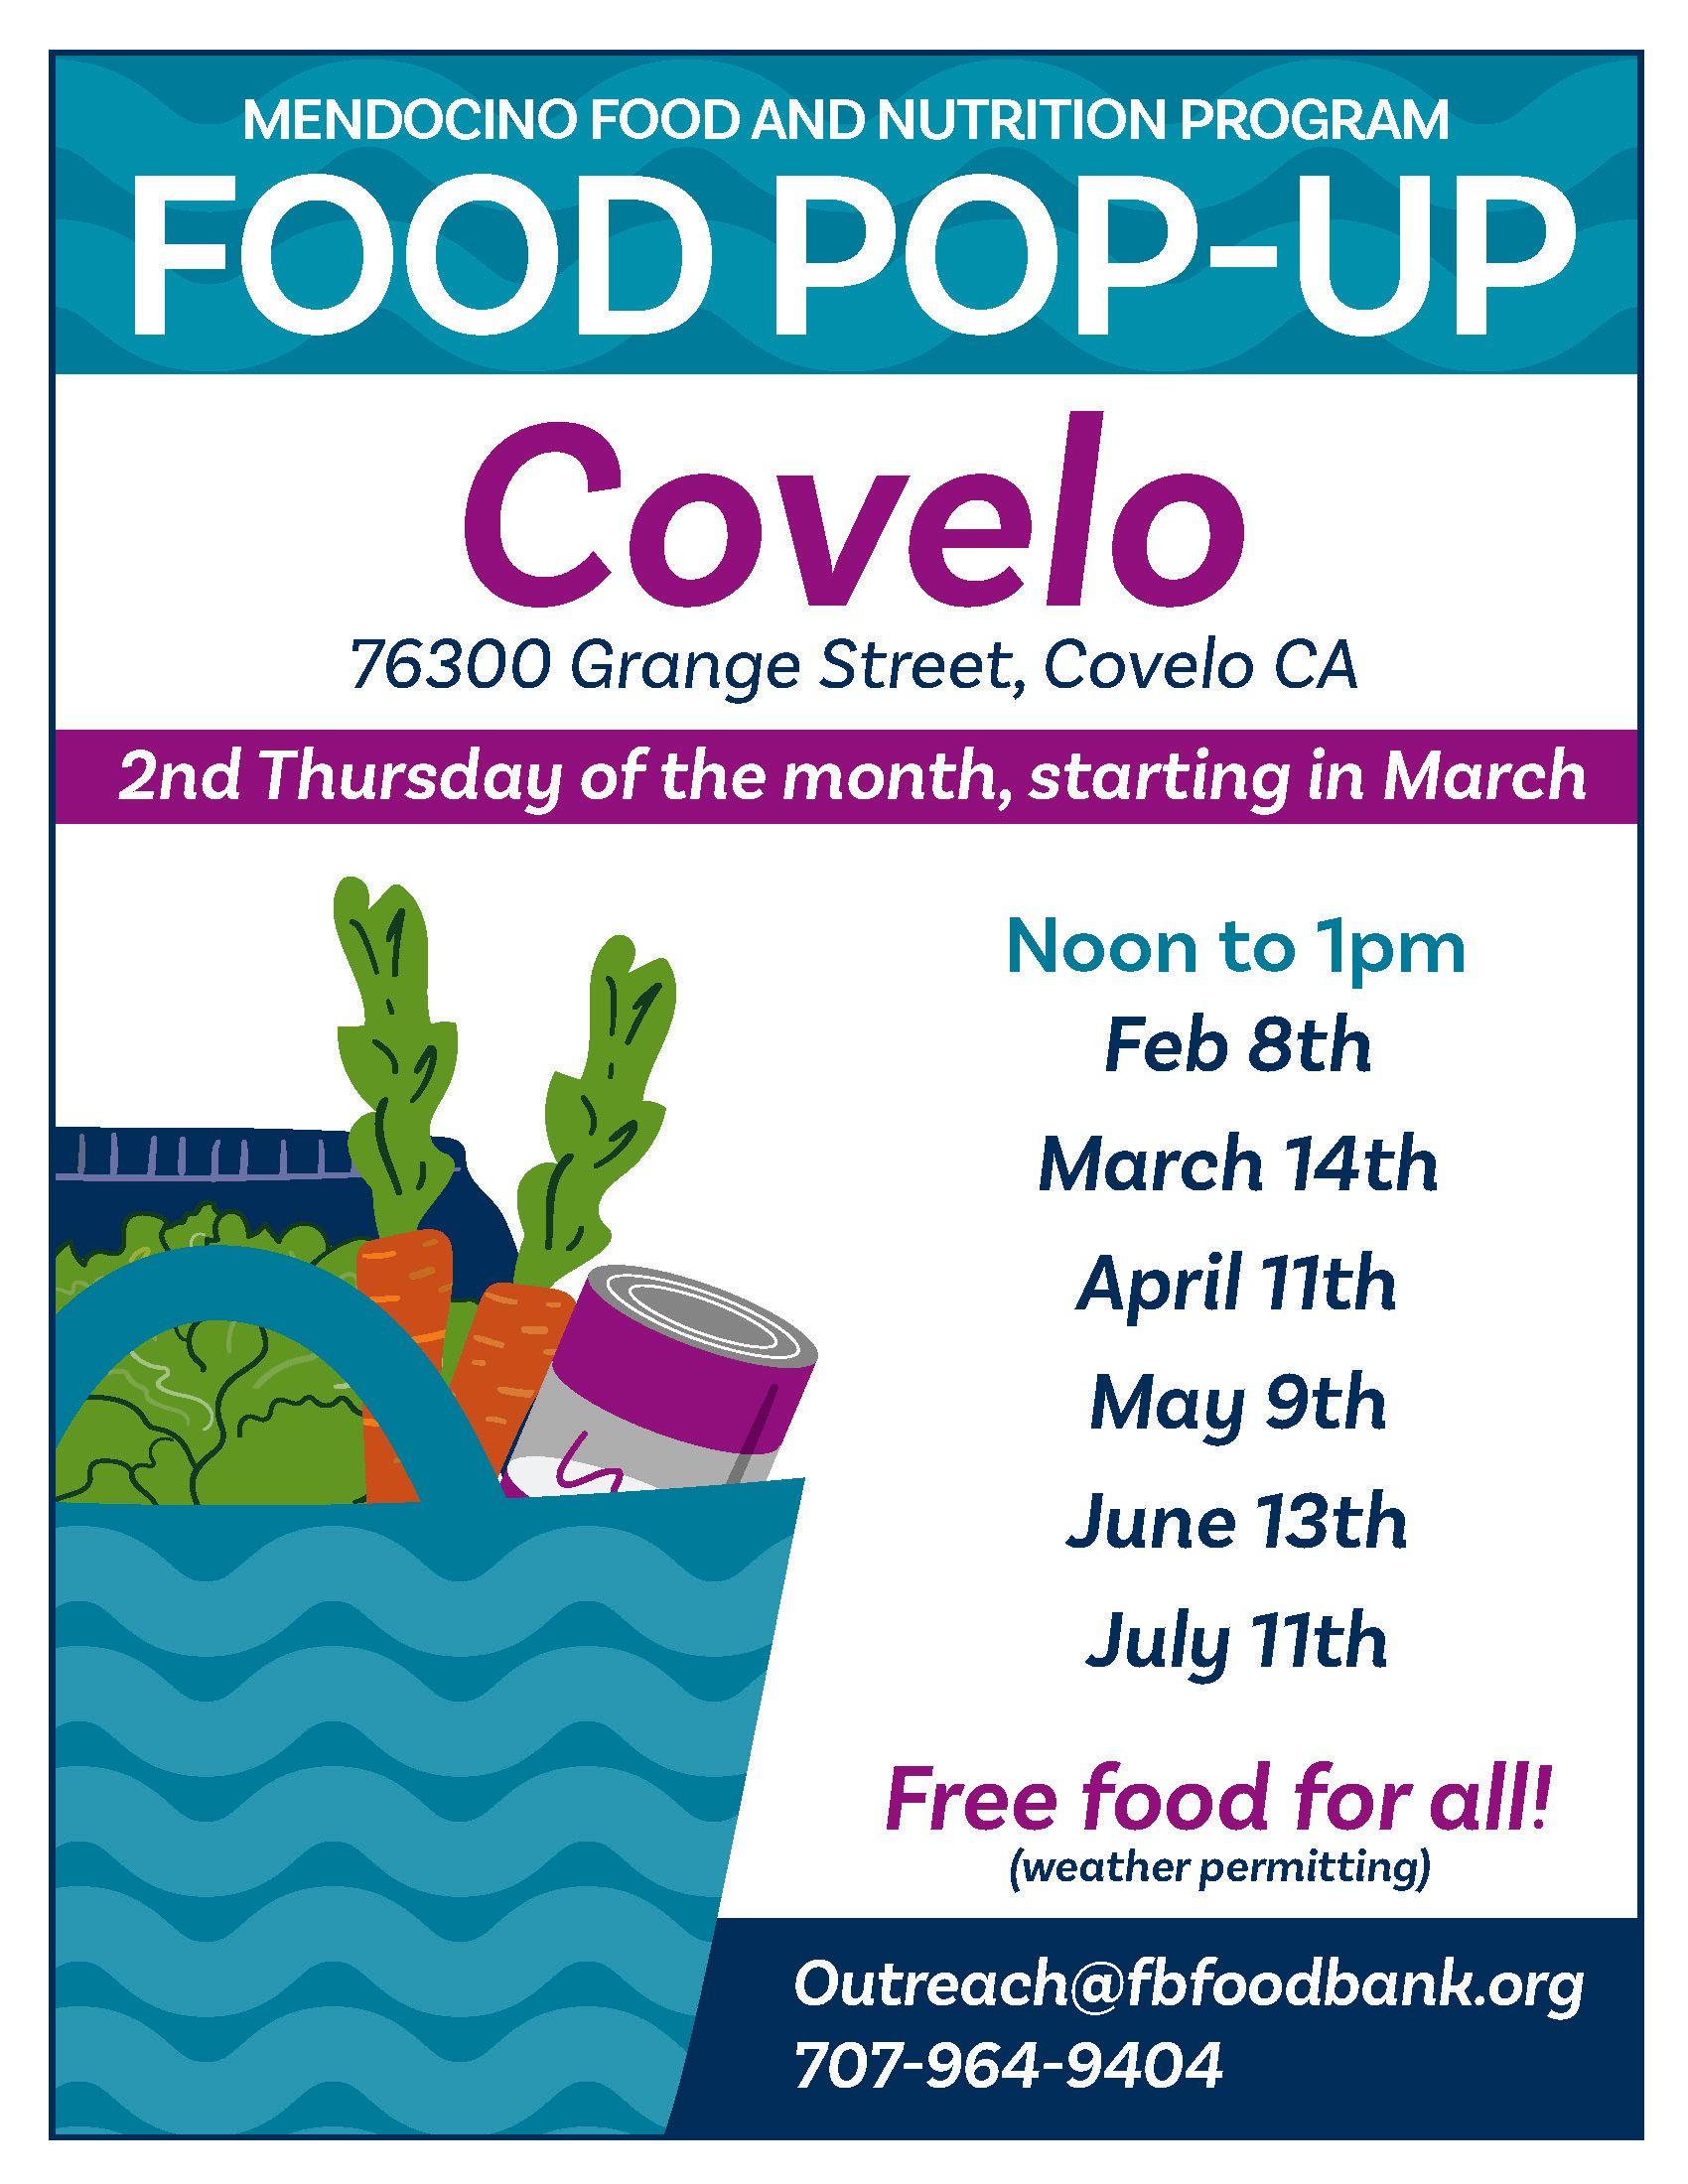 Food Pop-up Covelo